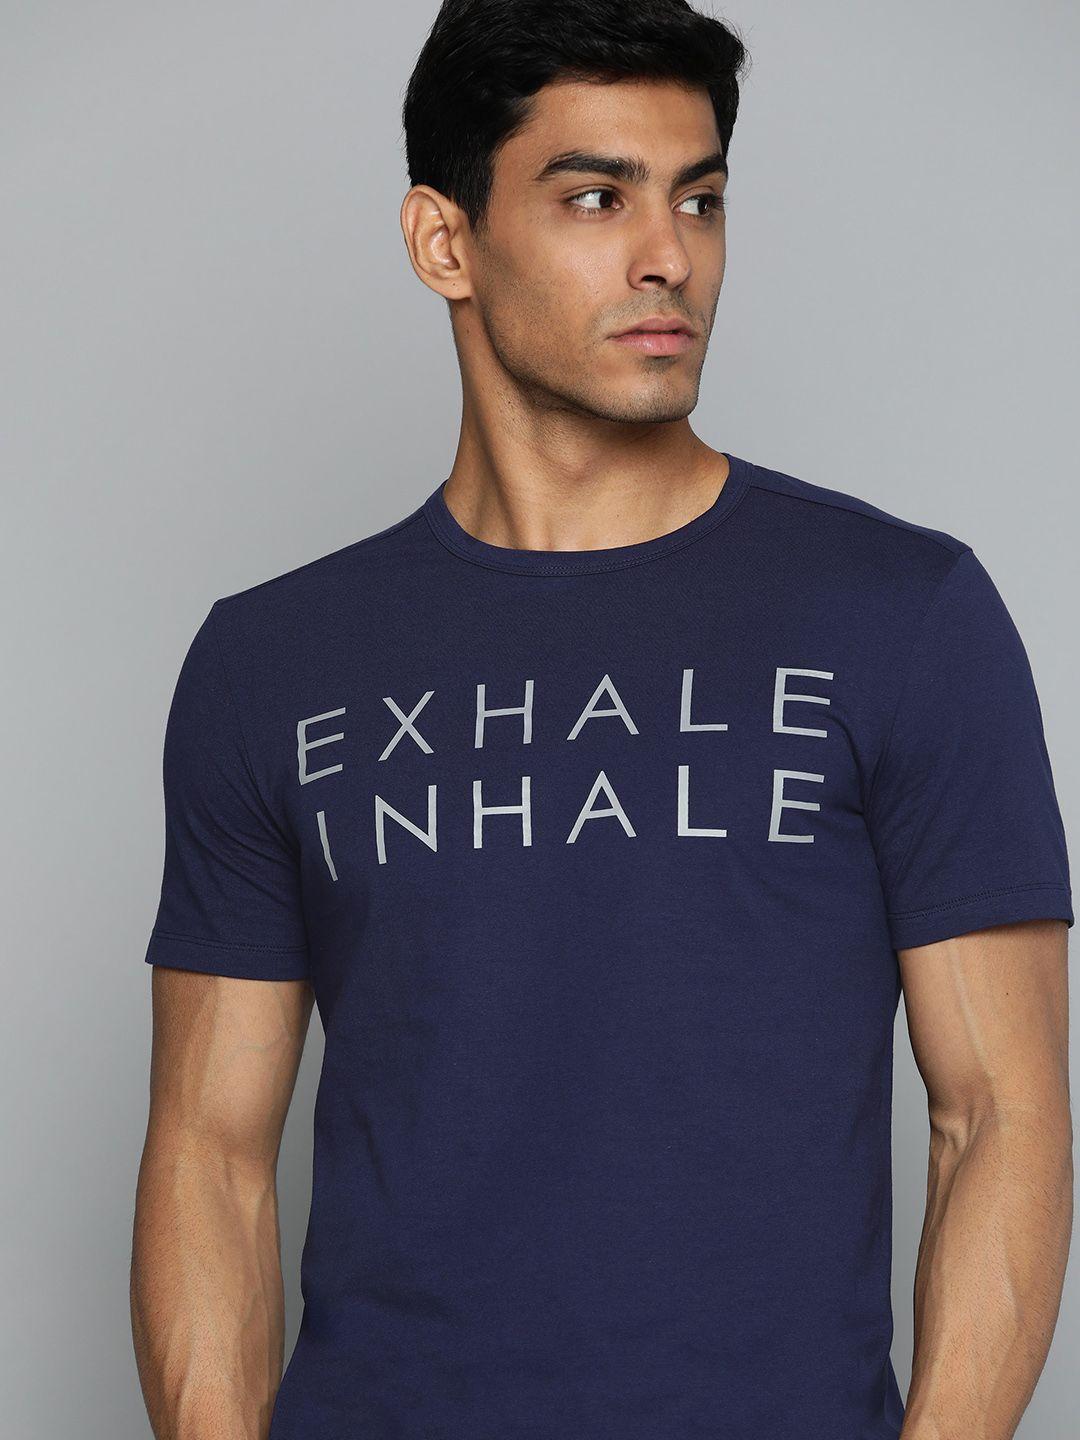 hrx-by-hrithik-roshan-men-navy-blue-typography-printed-t-shirt